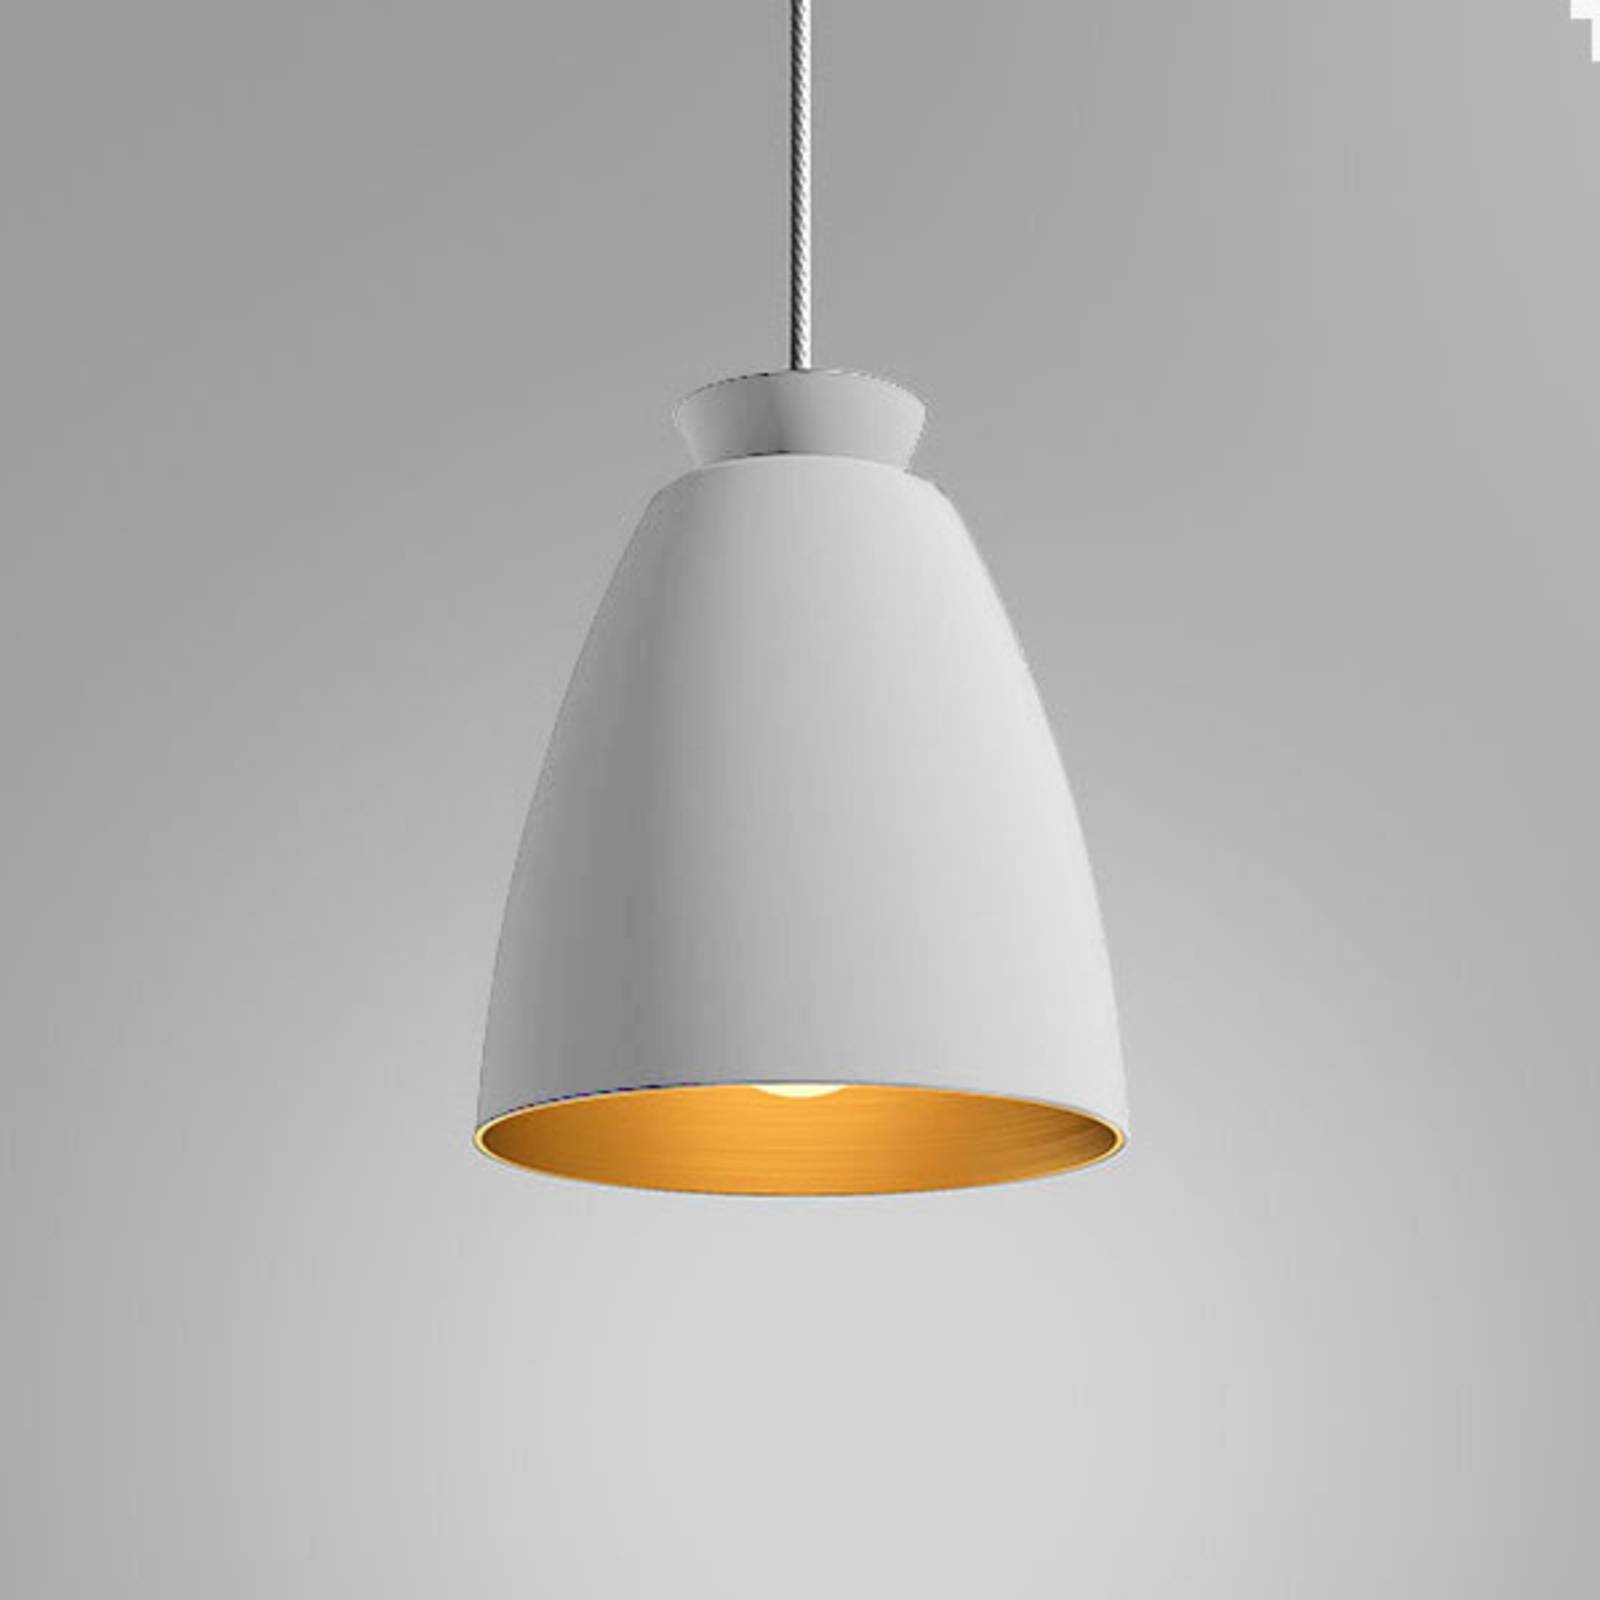 Innermost Chelsea - hanglamp Ø 18cm wit